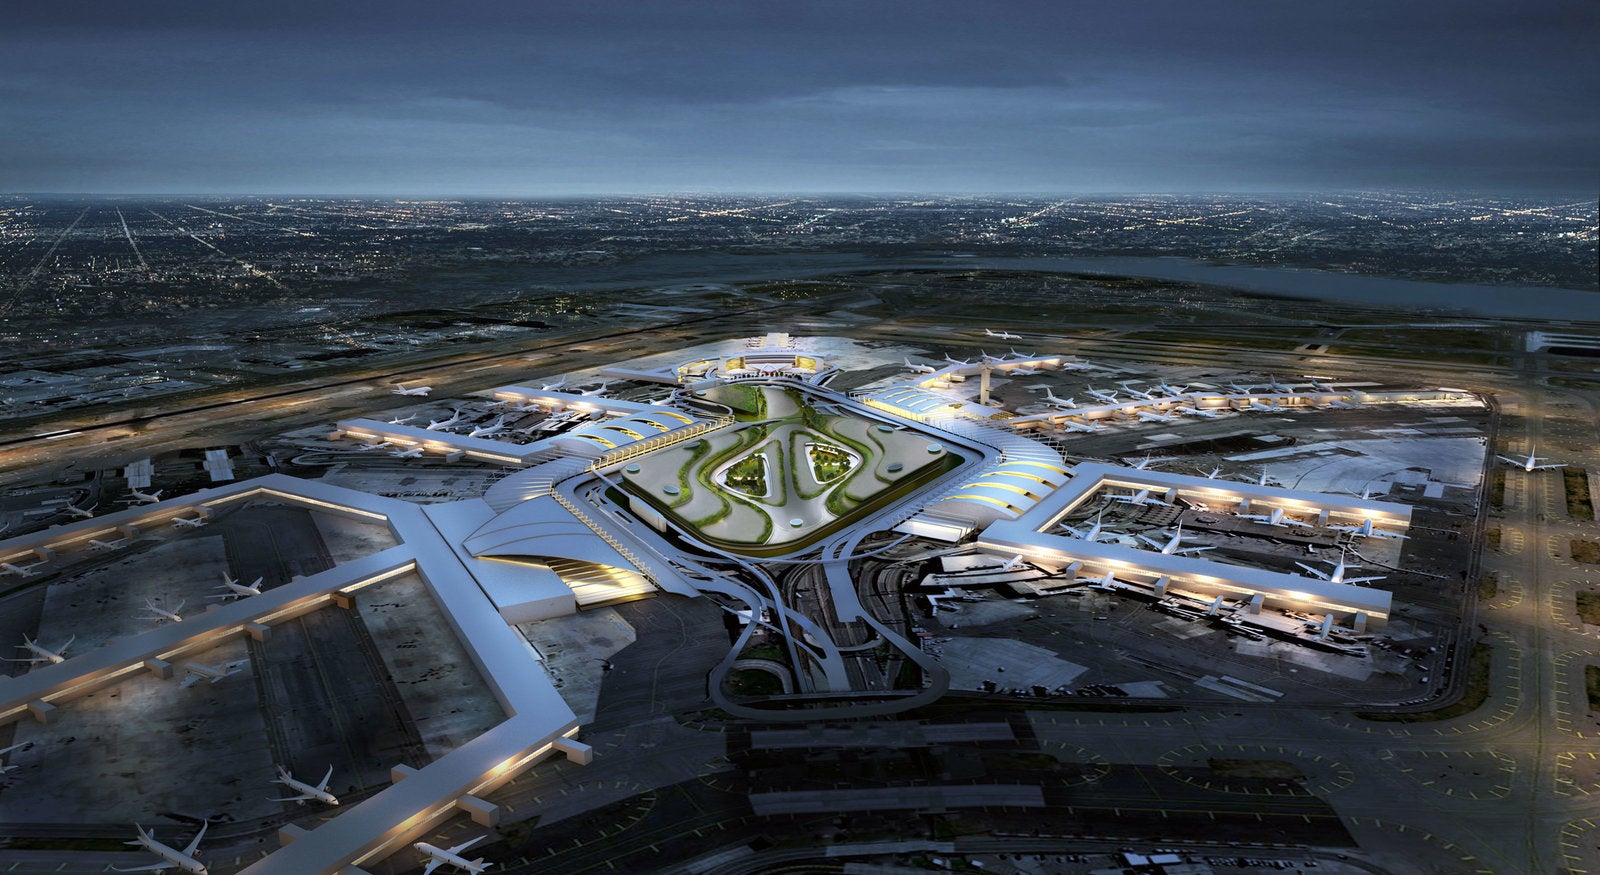 Jfk Airports Ambitious Terminal 4 Redevelopment Nri Digital